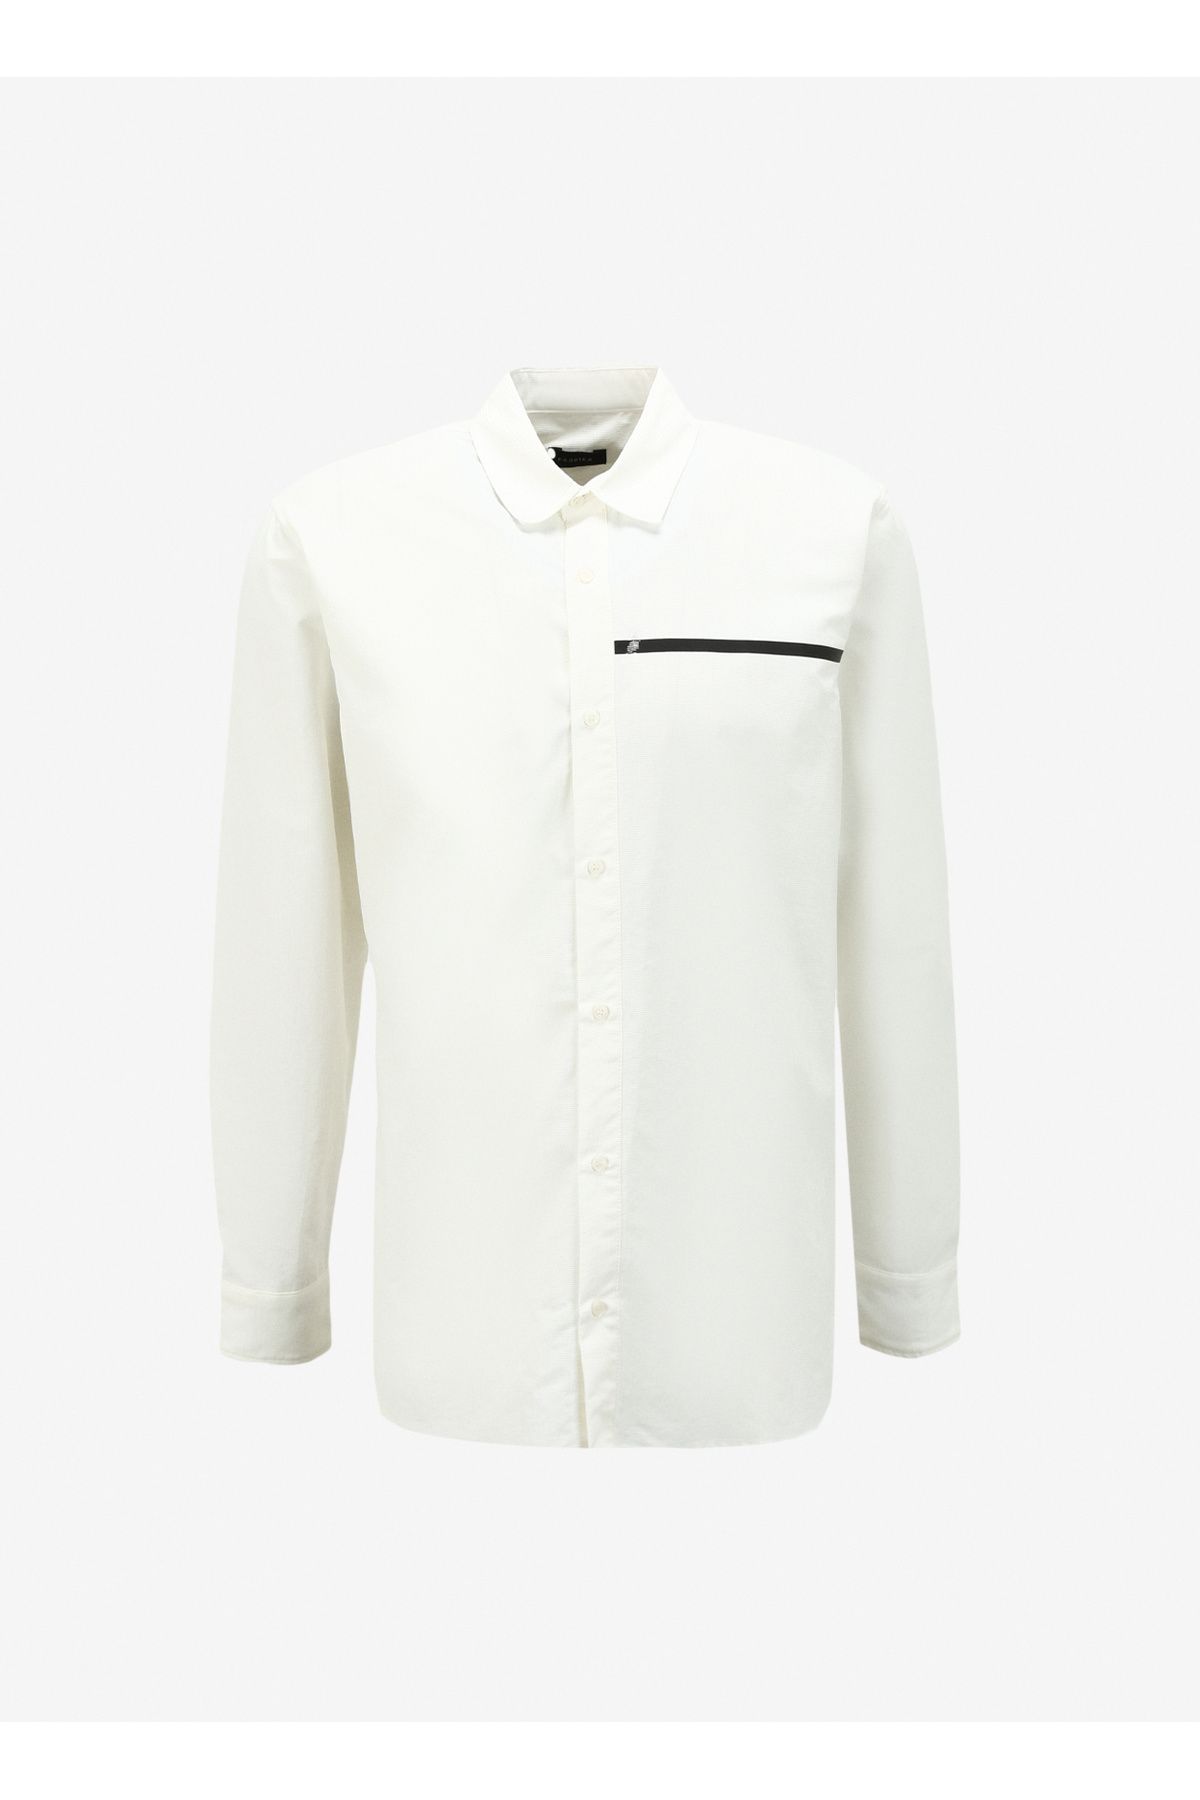 Fabrika Basic Gömlek Yaka Düz Beyaz Erkek Gömlek F4SM-GML 0749